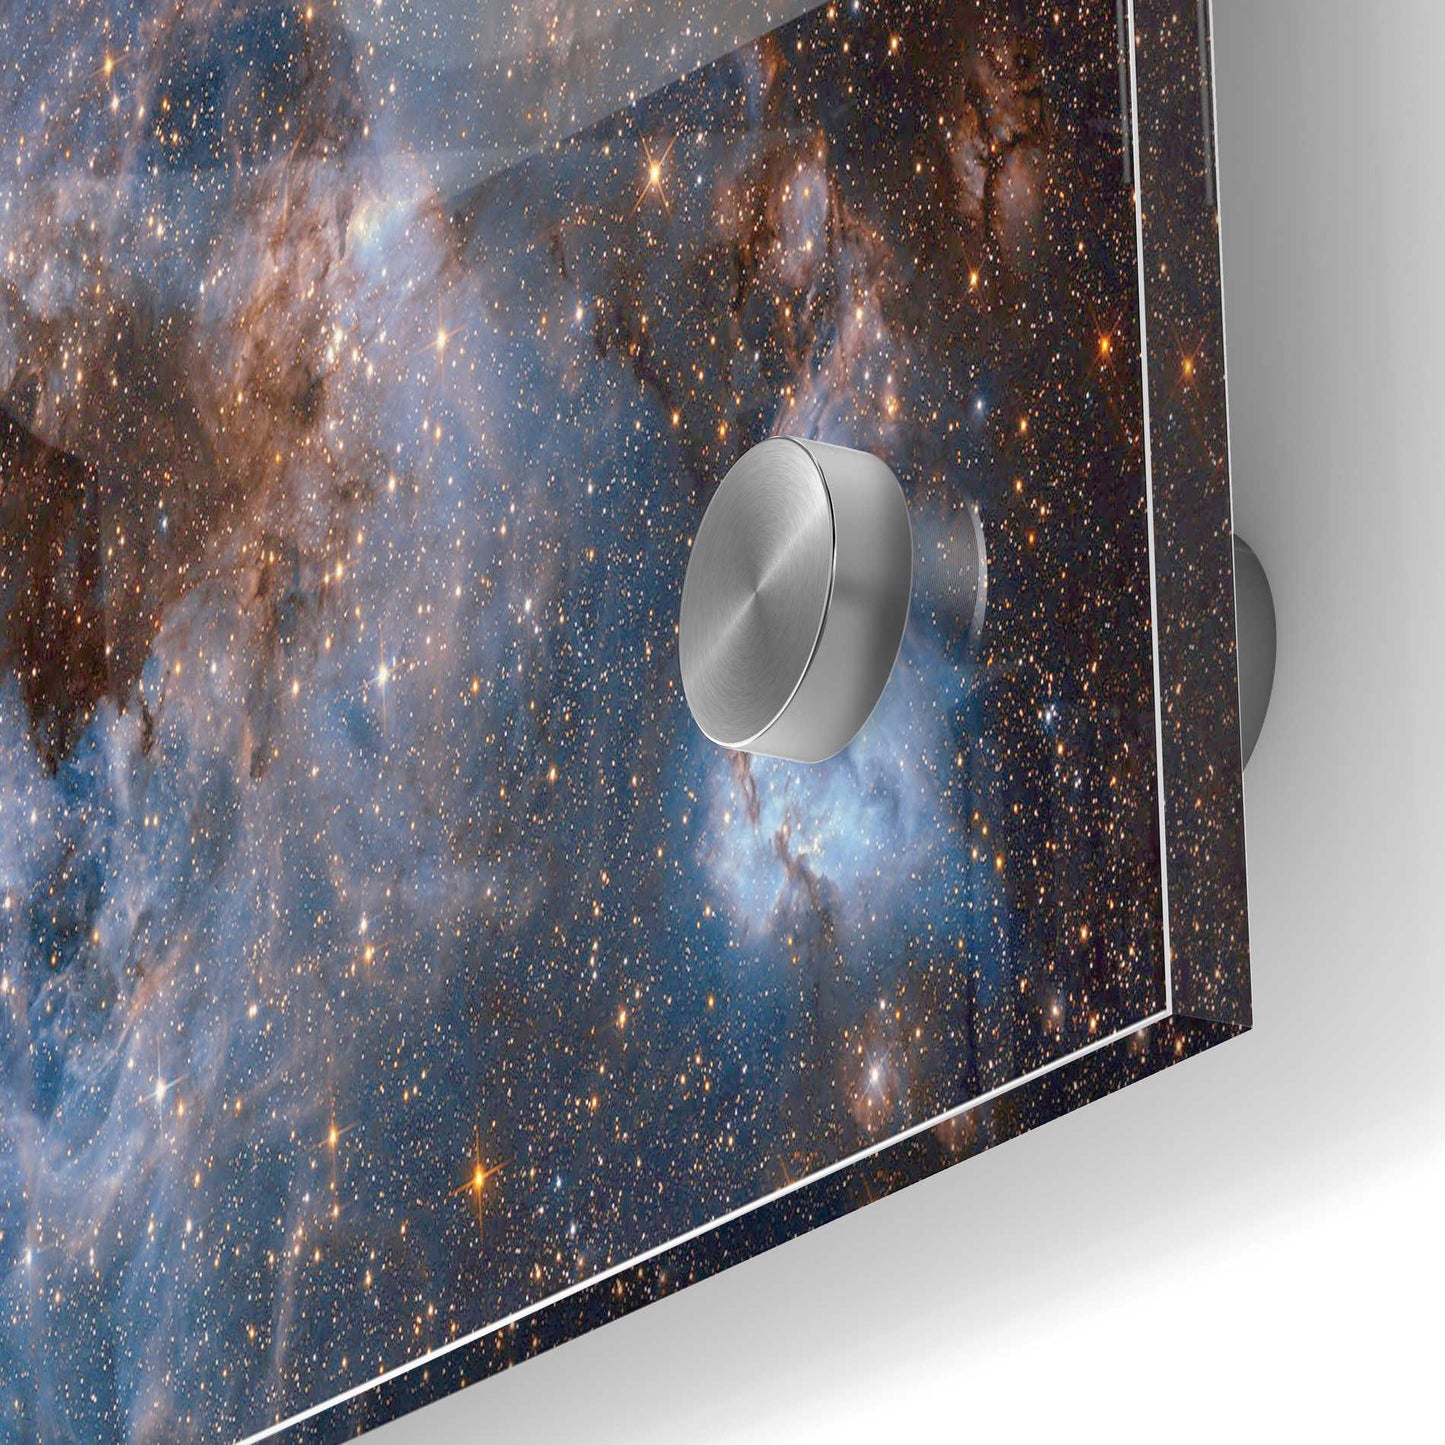 Epic Art 'Maelstrom Cloud' Hubble Space Telescope Acrylic Glass Wall Art,24x36